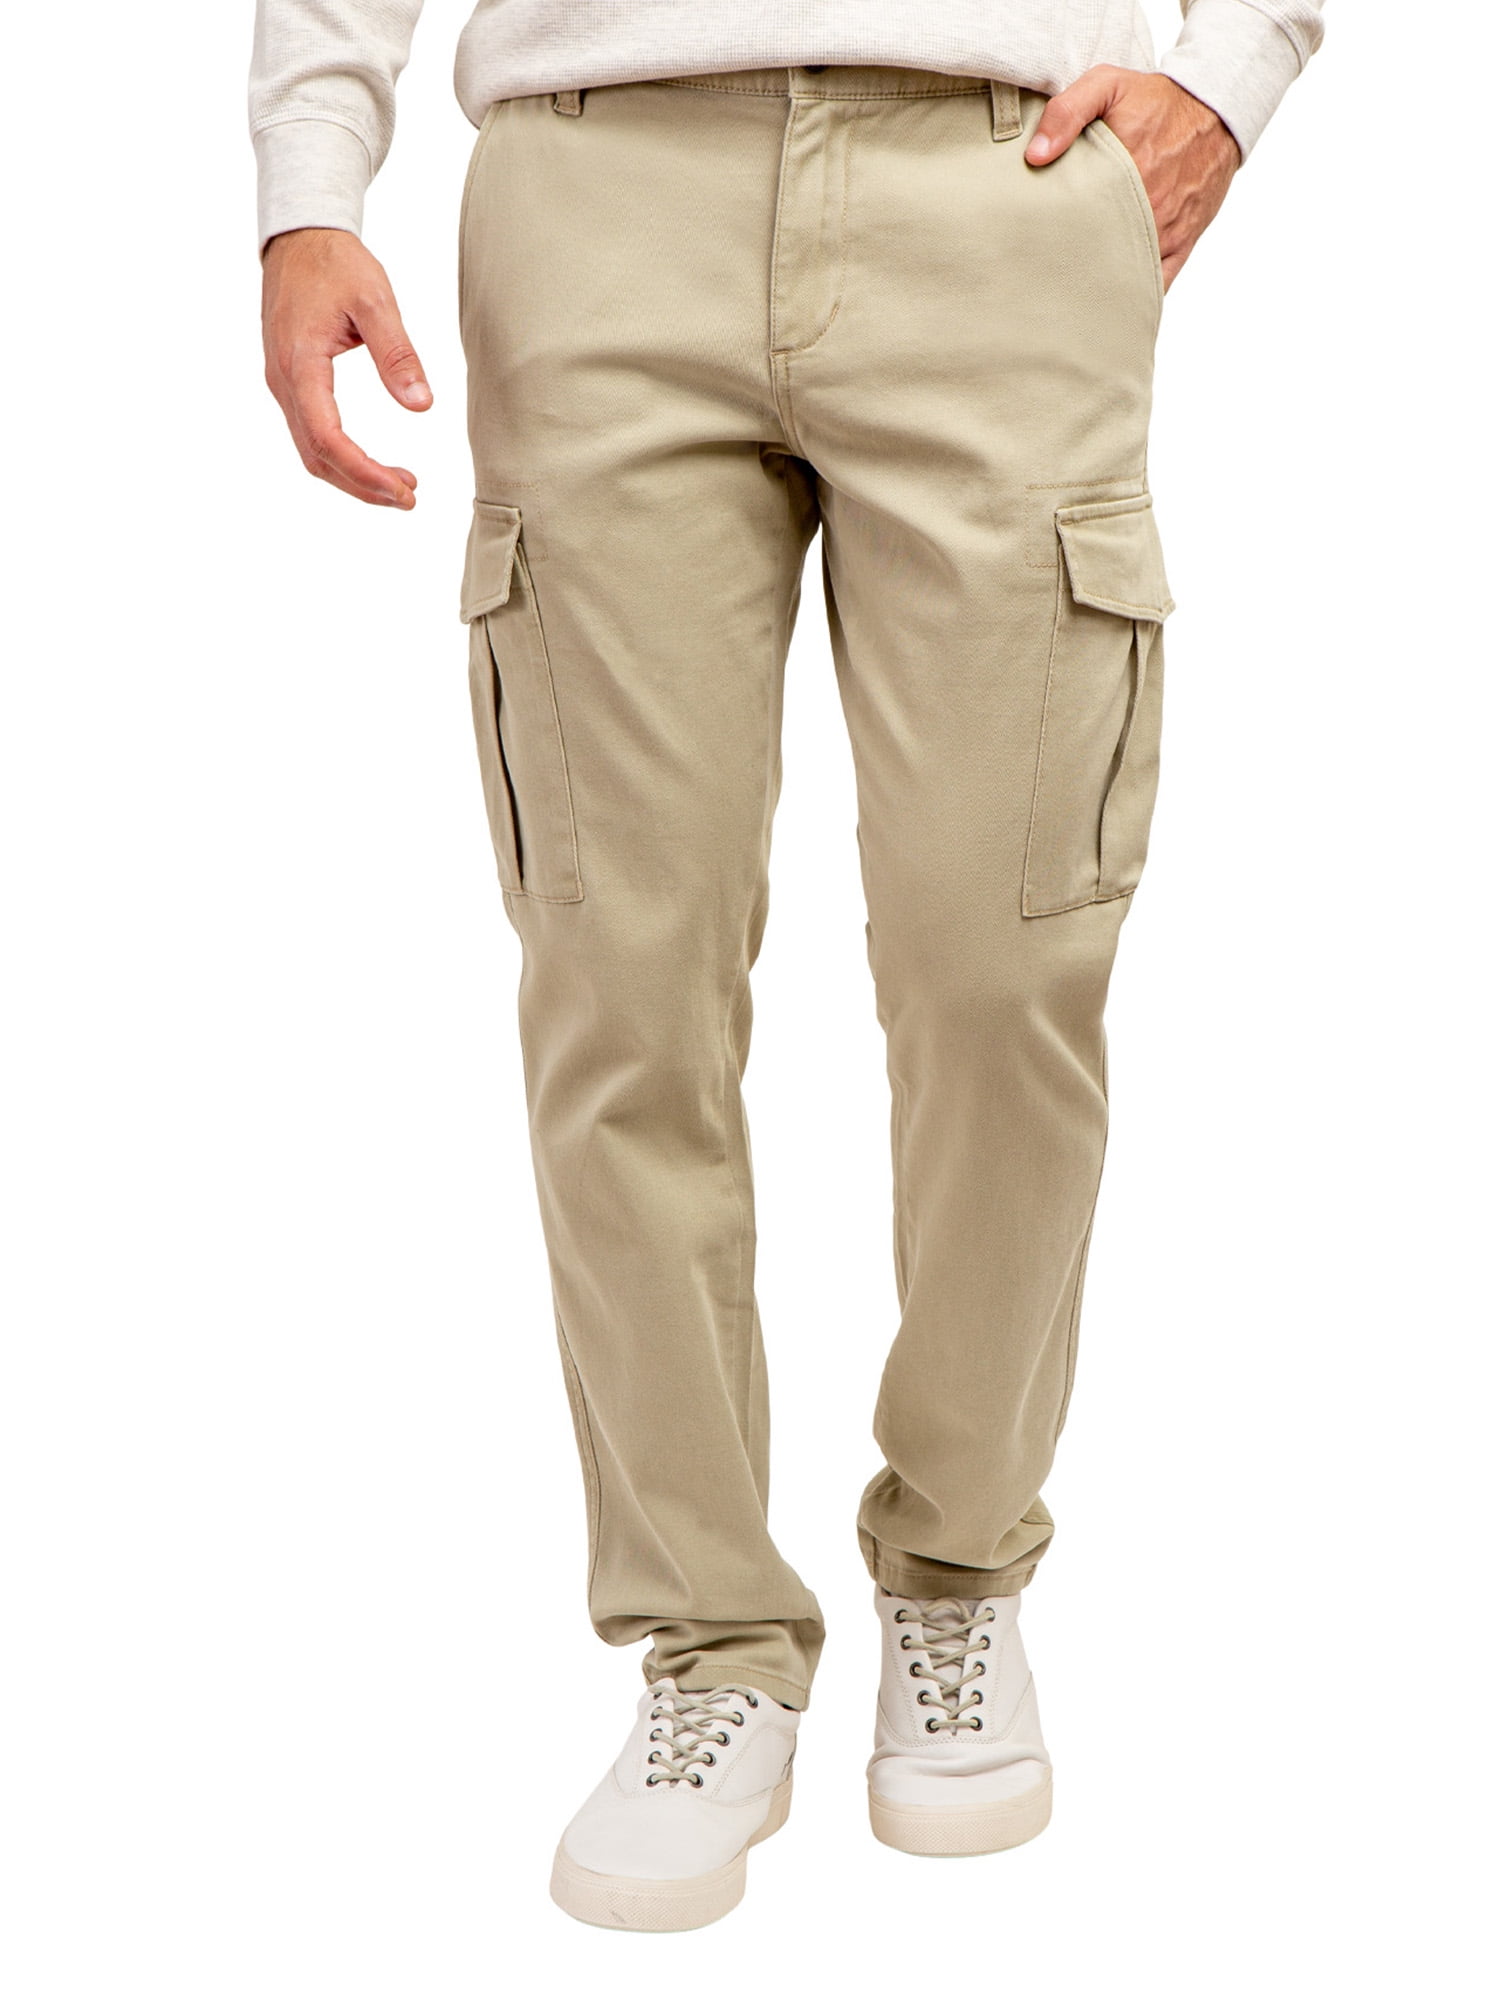 Buy US POLO ASSN Boys 6 Pocket Solid Cargo Pants  Shoppers Stop